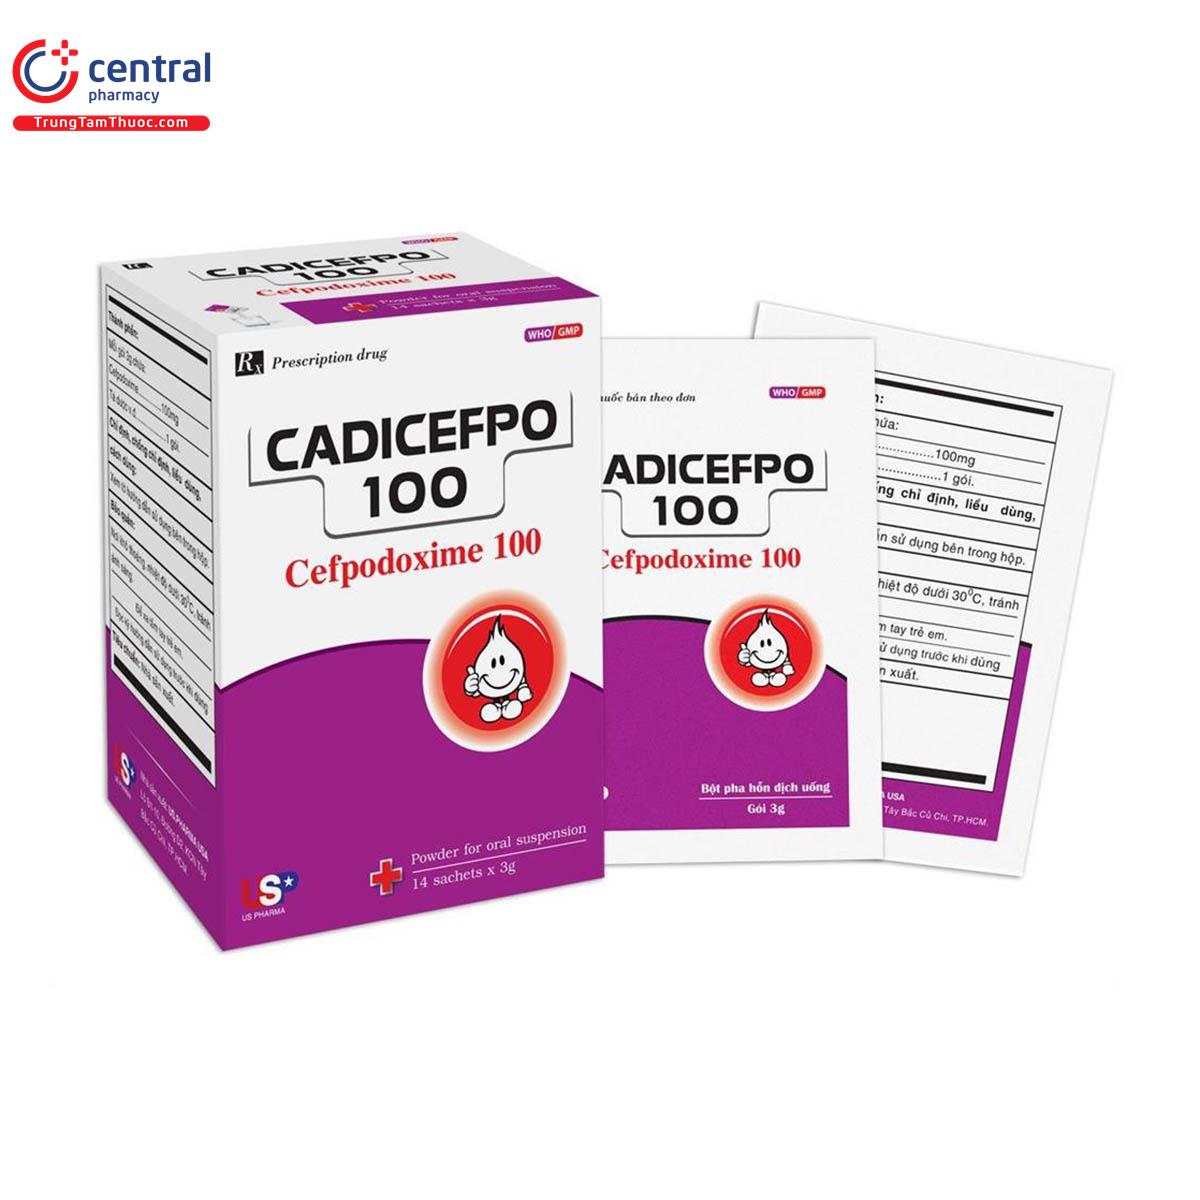 cadicefpo 100 us pharma 3 D1865